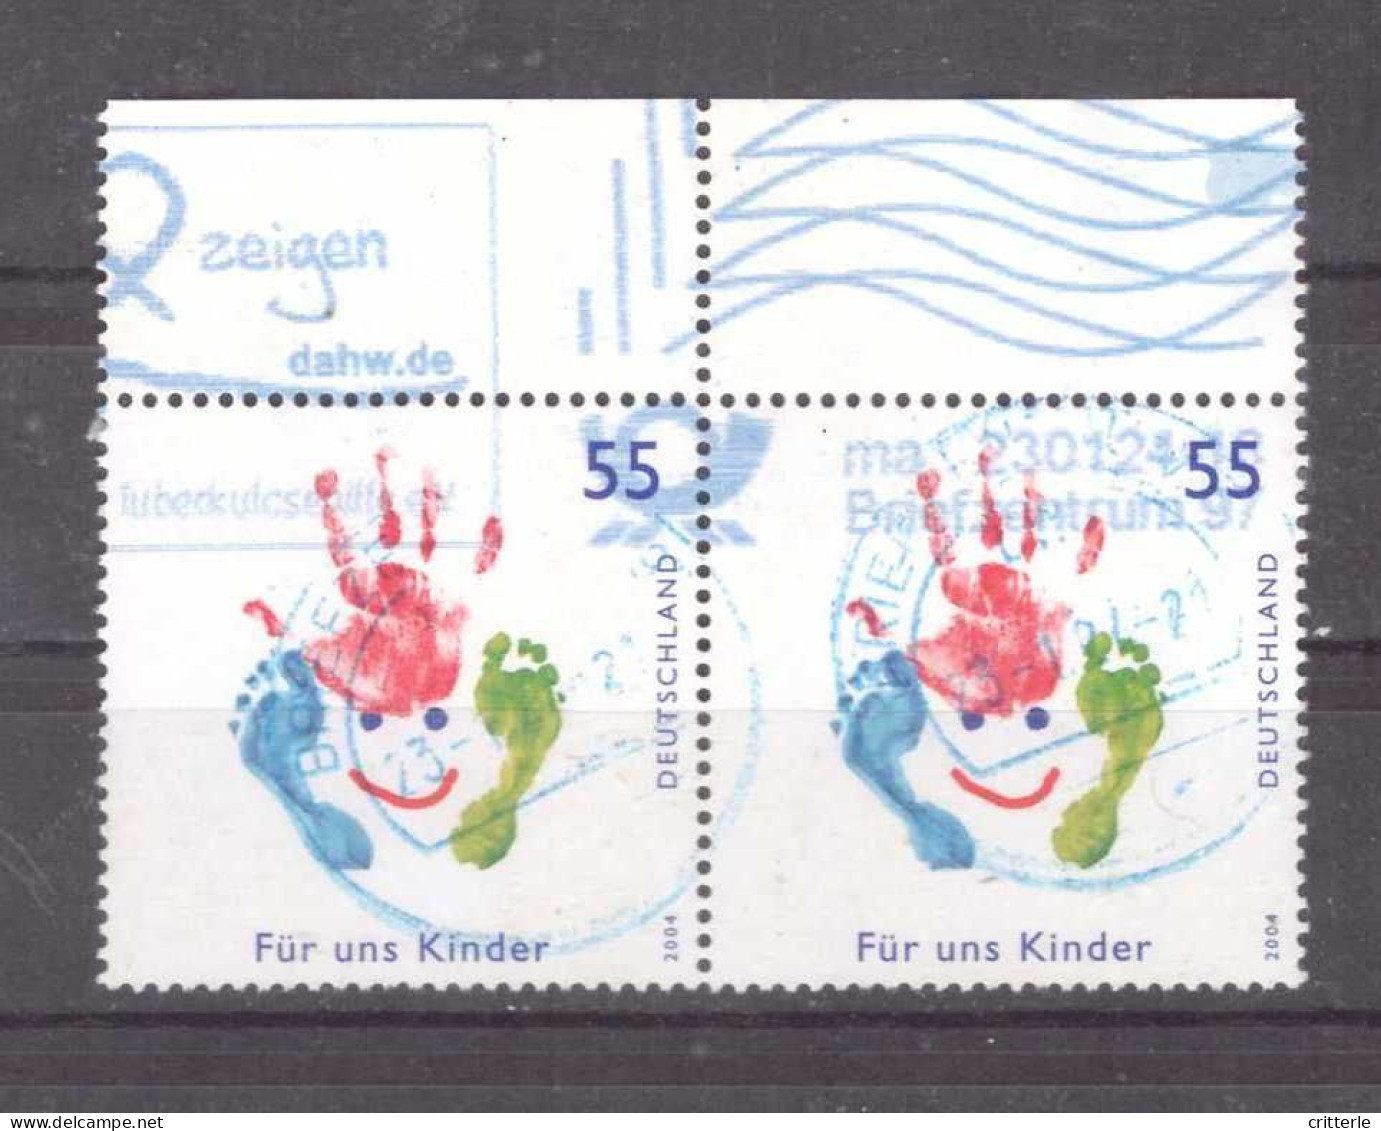 BRD Michel Nr. 2418 Gestempelt (2) - Used Stamps